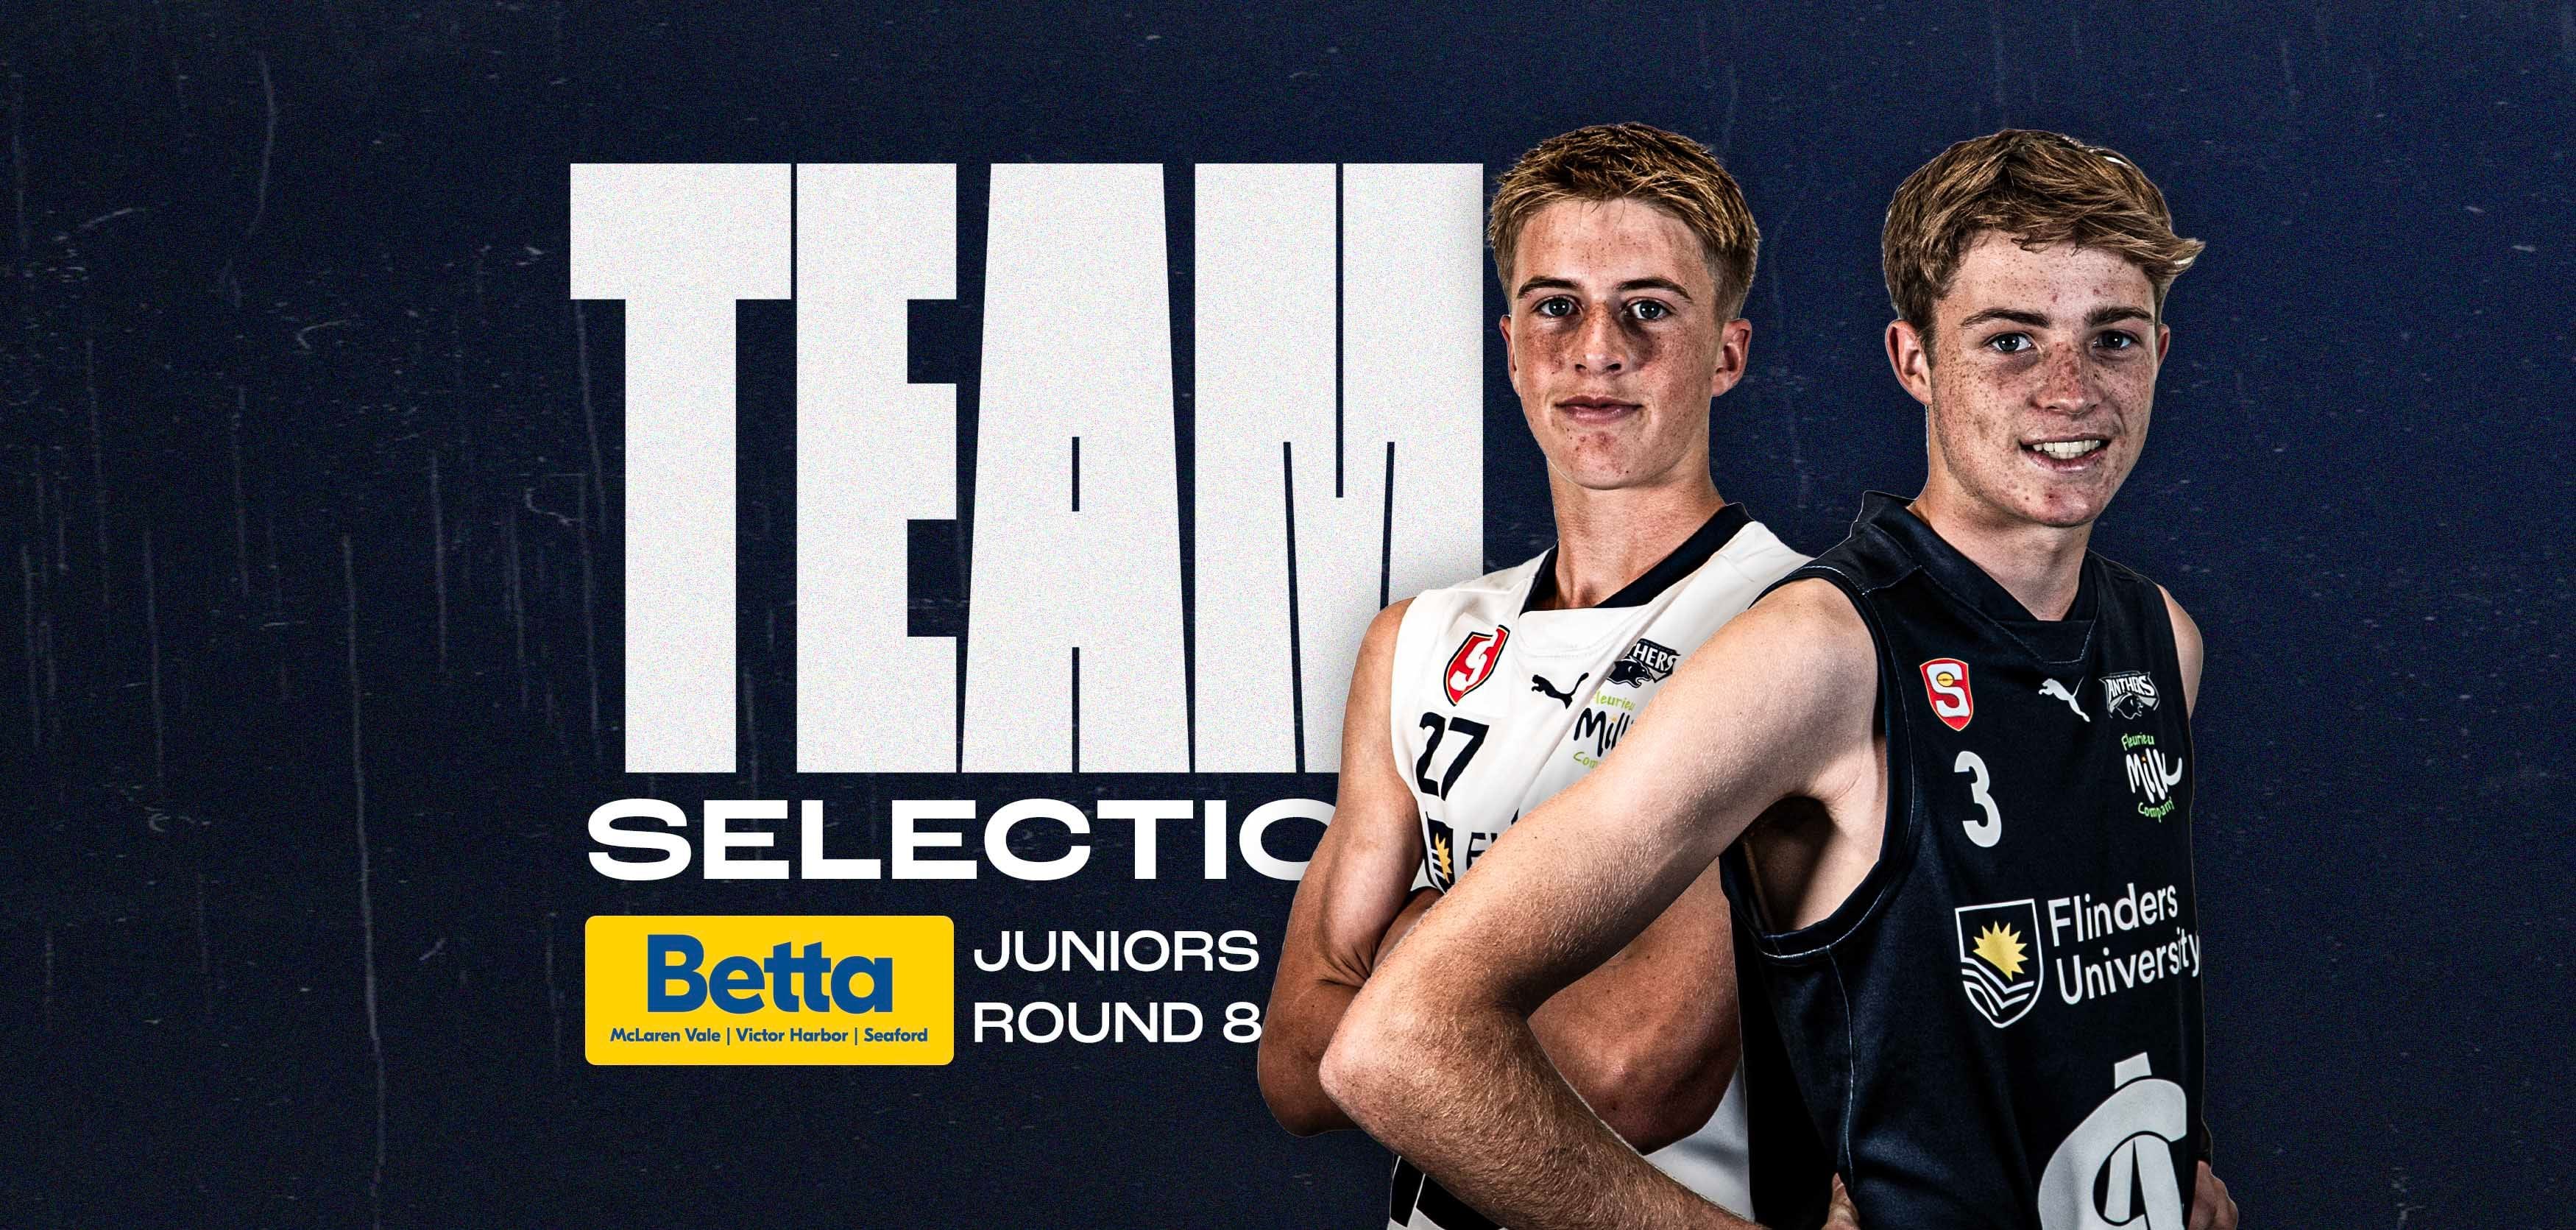 BETTA Team Selection: Juniors Round 8 v Centrals